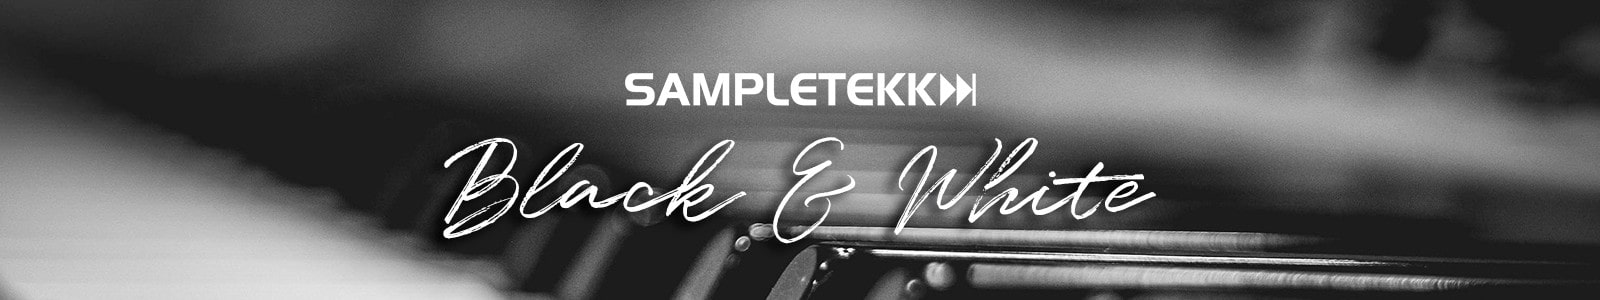 Black and White Piano Bundle by Sampletekk